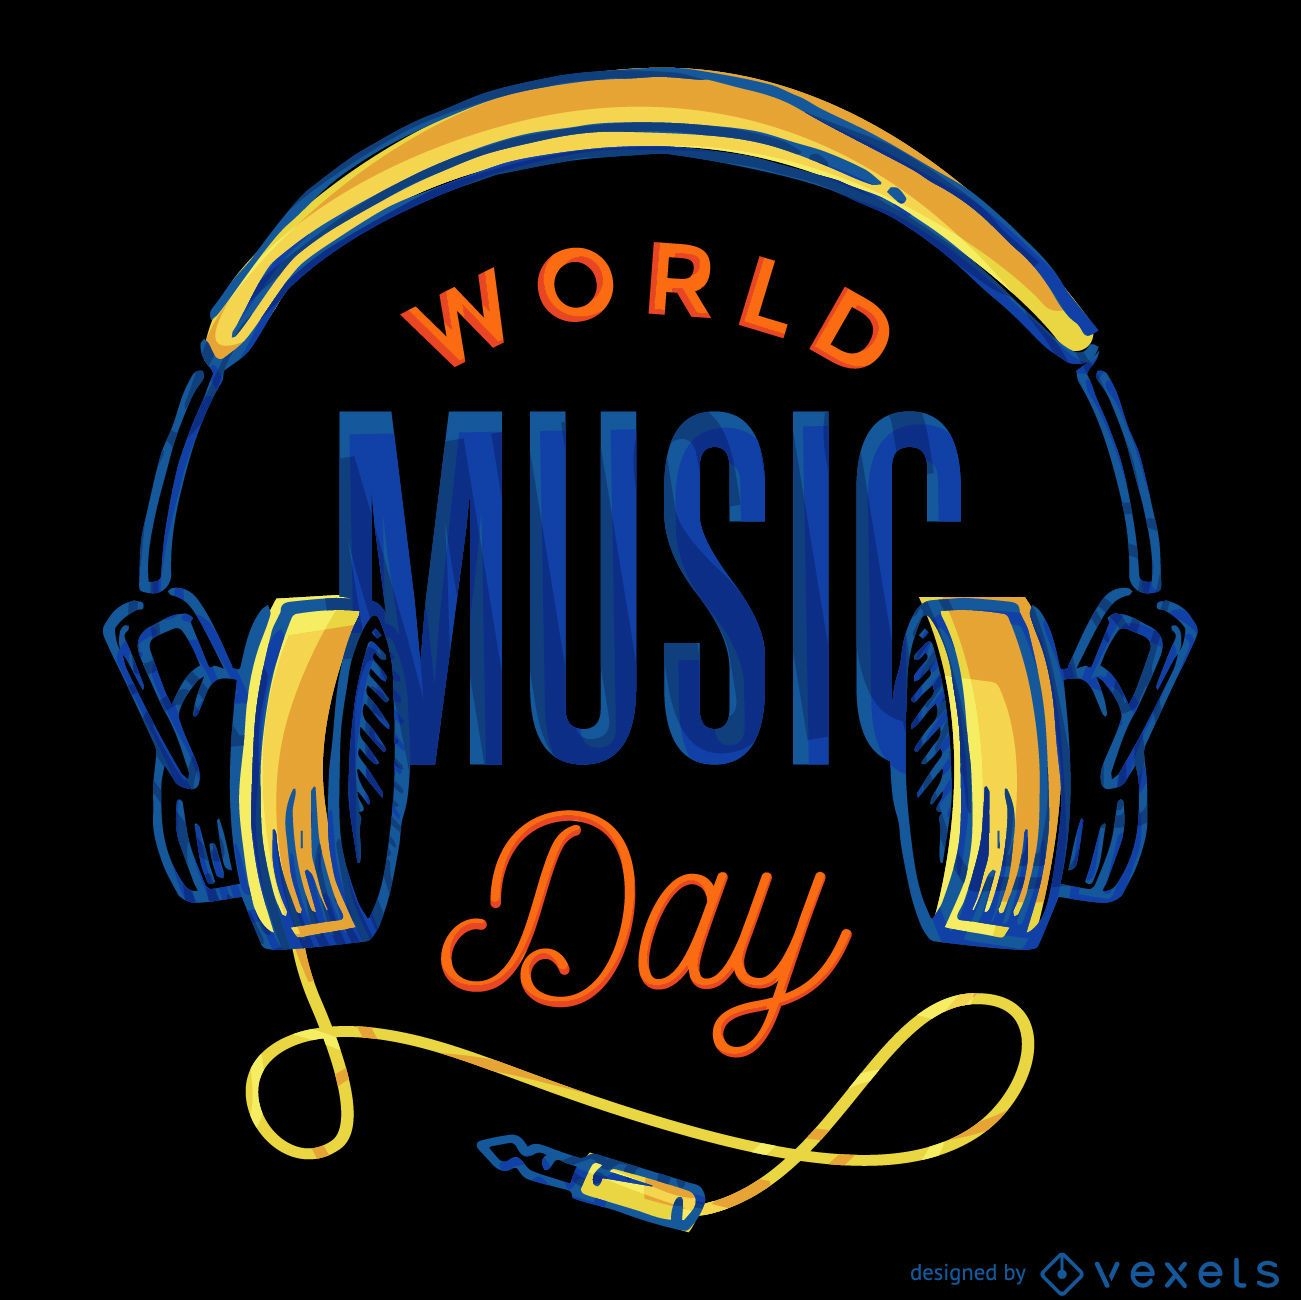 World Music Day design